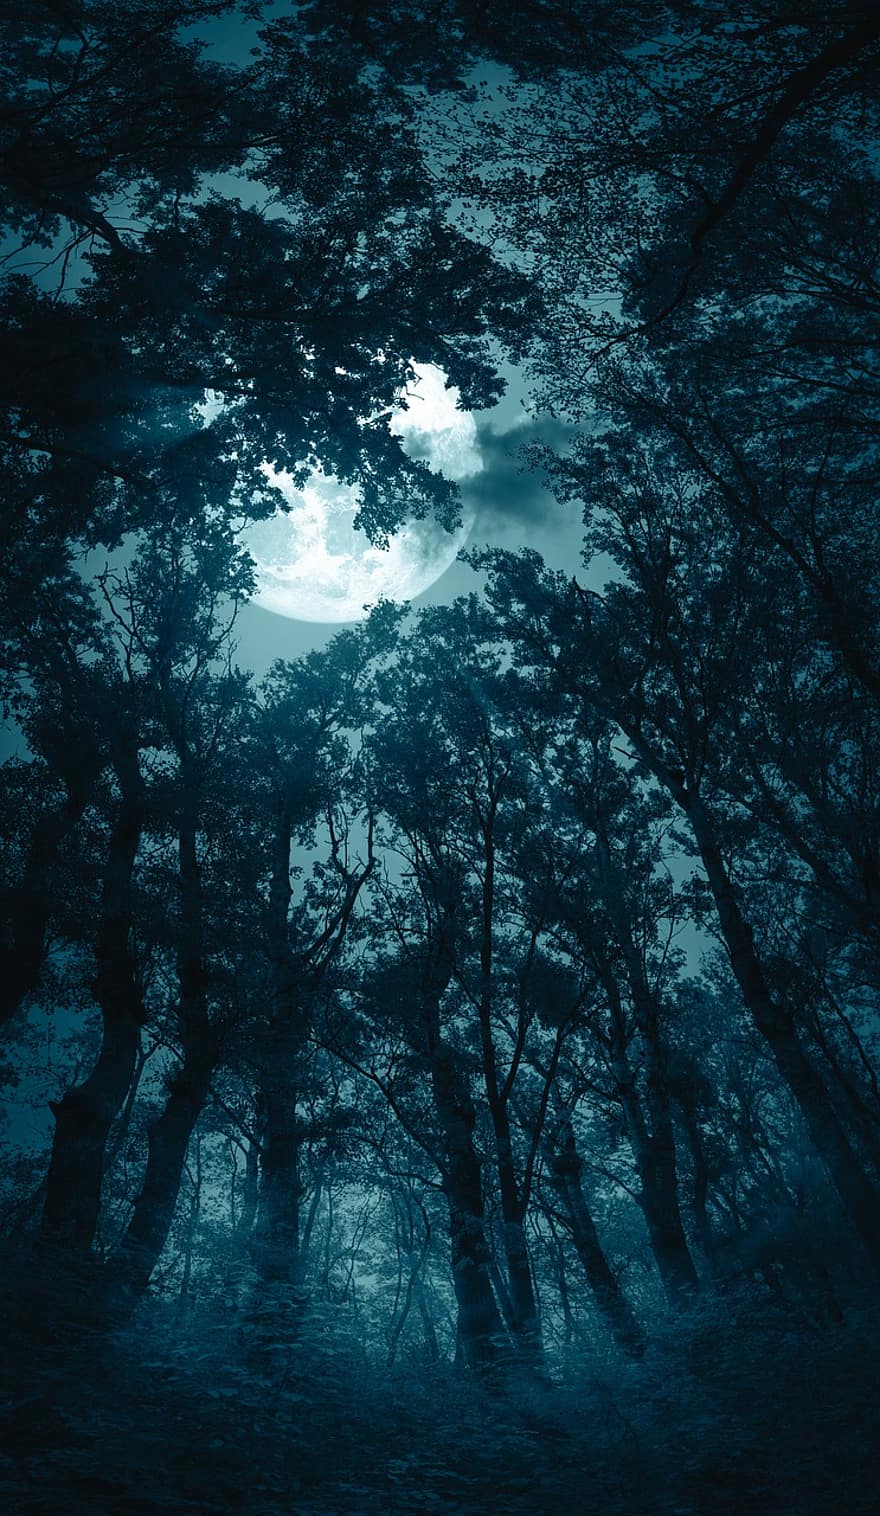 Forest, Moon, Fog, Night, Halloween, Moonlight, Creepy, Darkness, Mystical, Fantasy, Horror